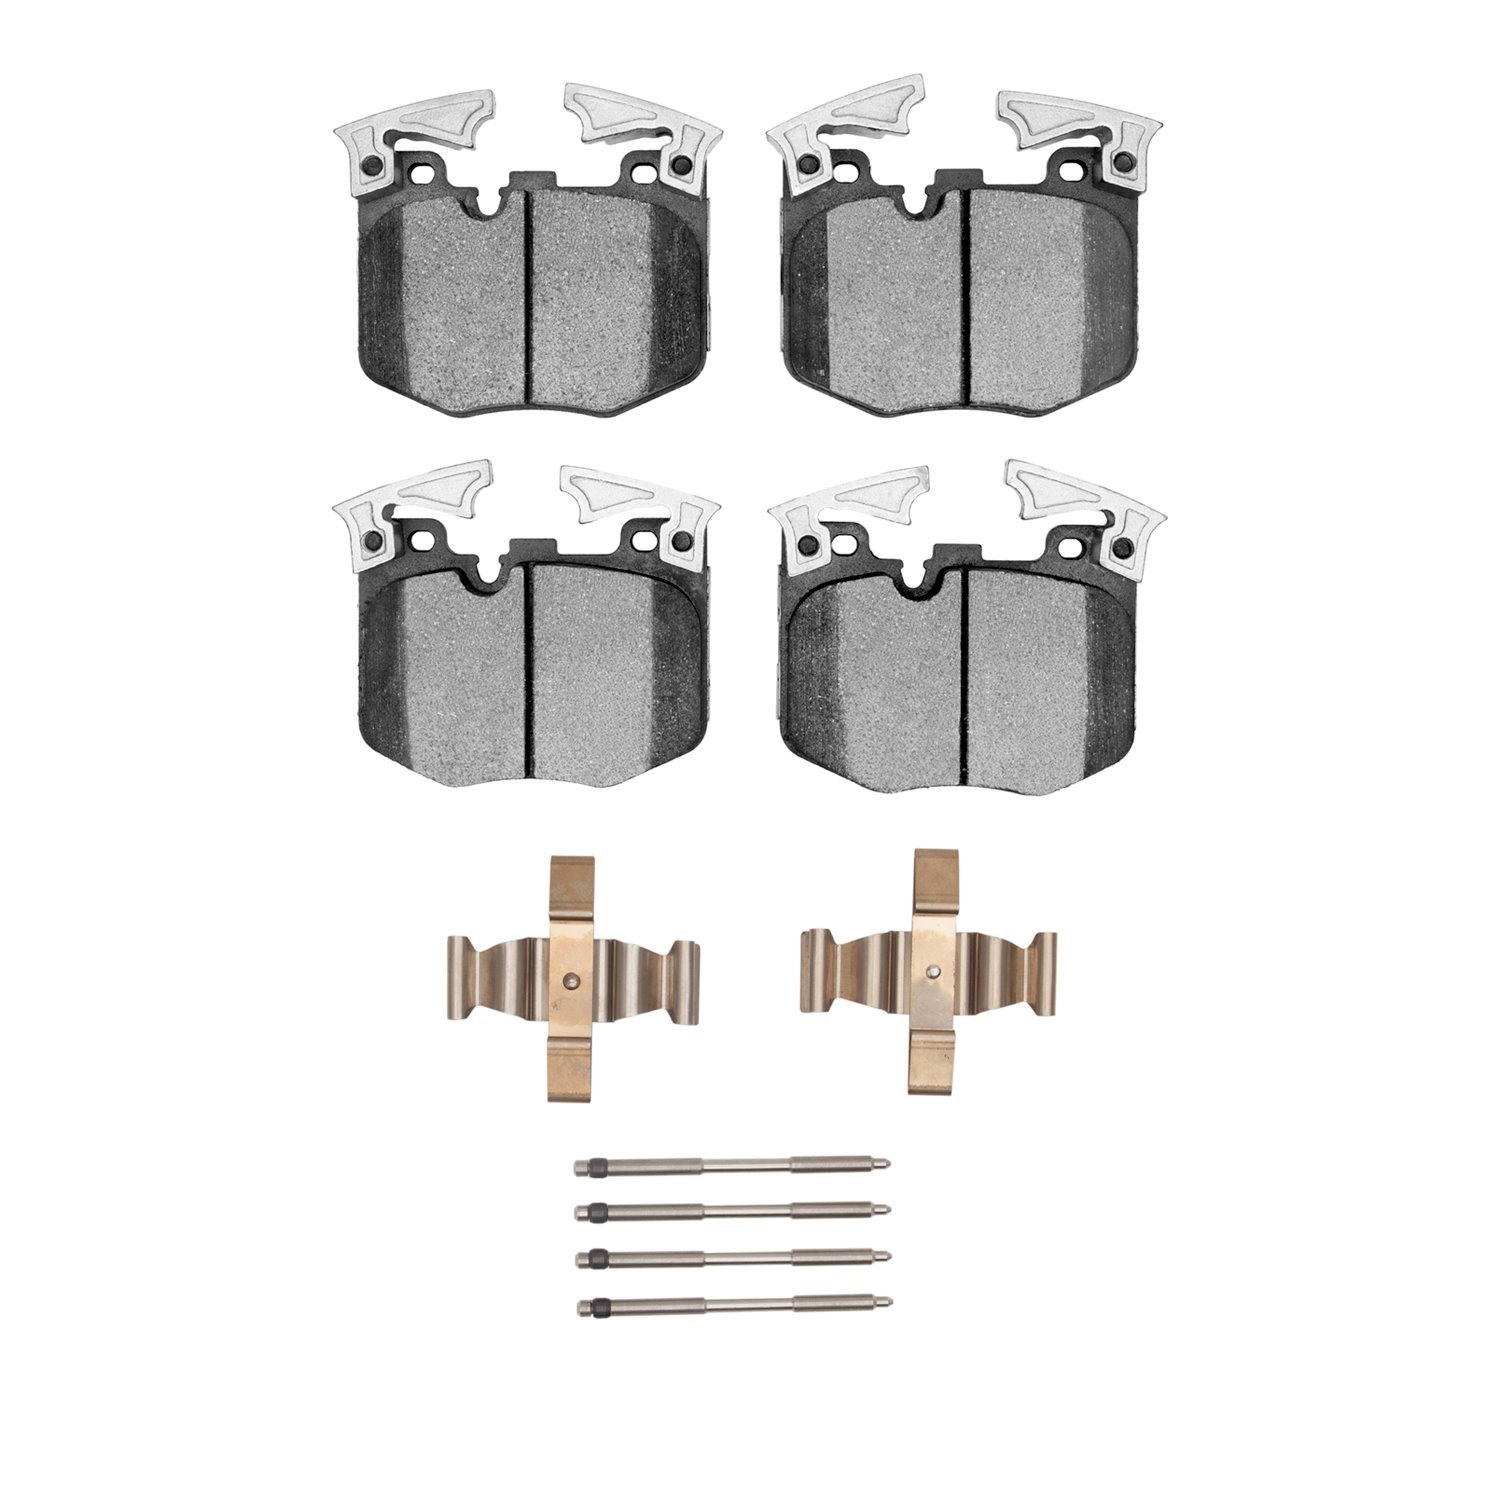 Ceramic Brake Pads & Hardware Kit, Fits Select Fits Multiple Makes/Models, Position: Front